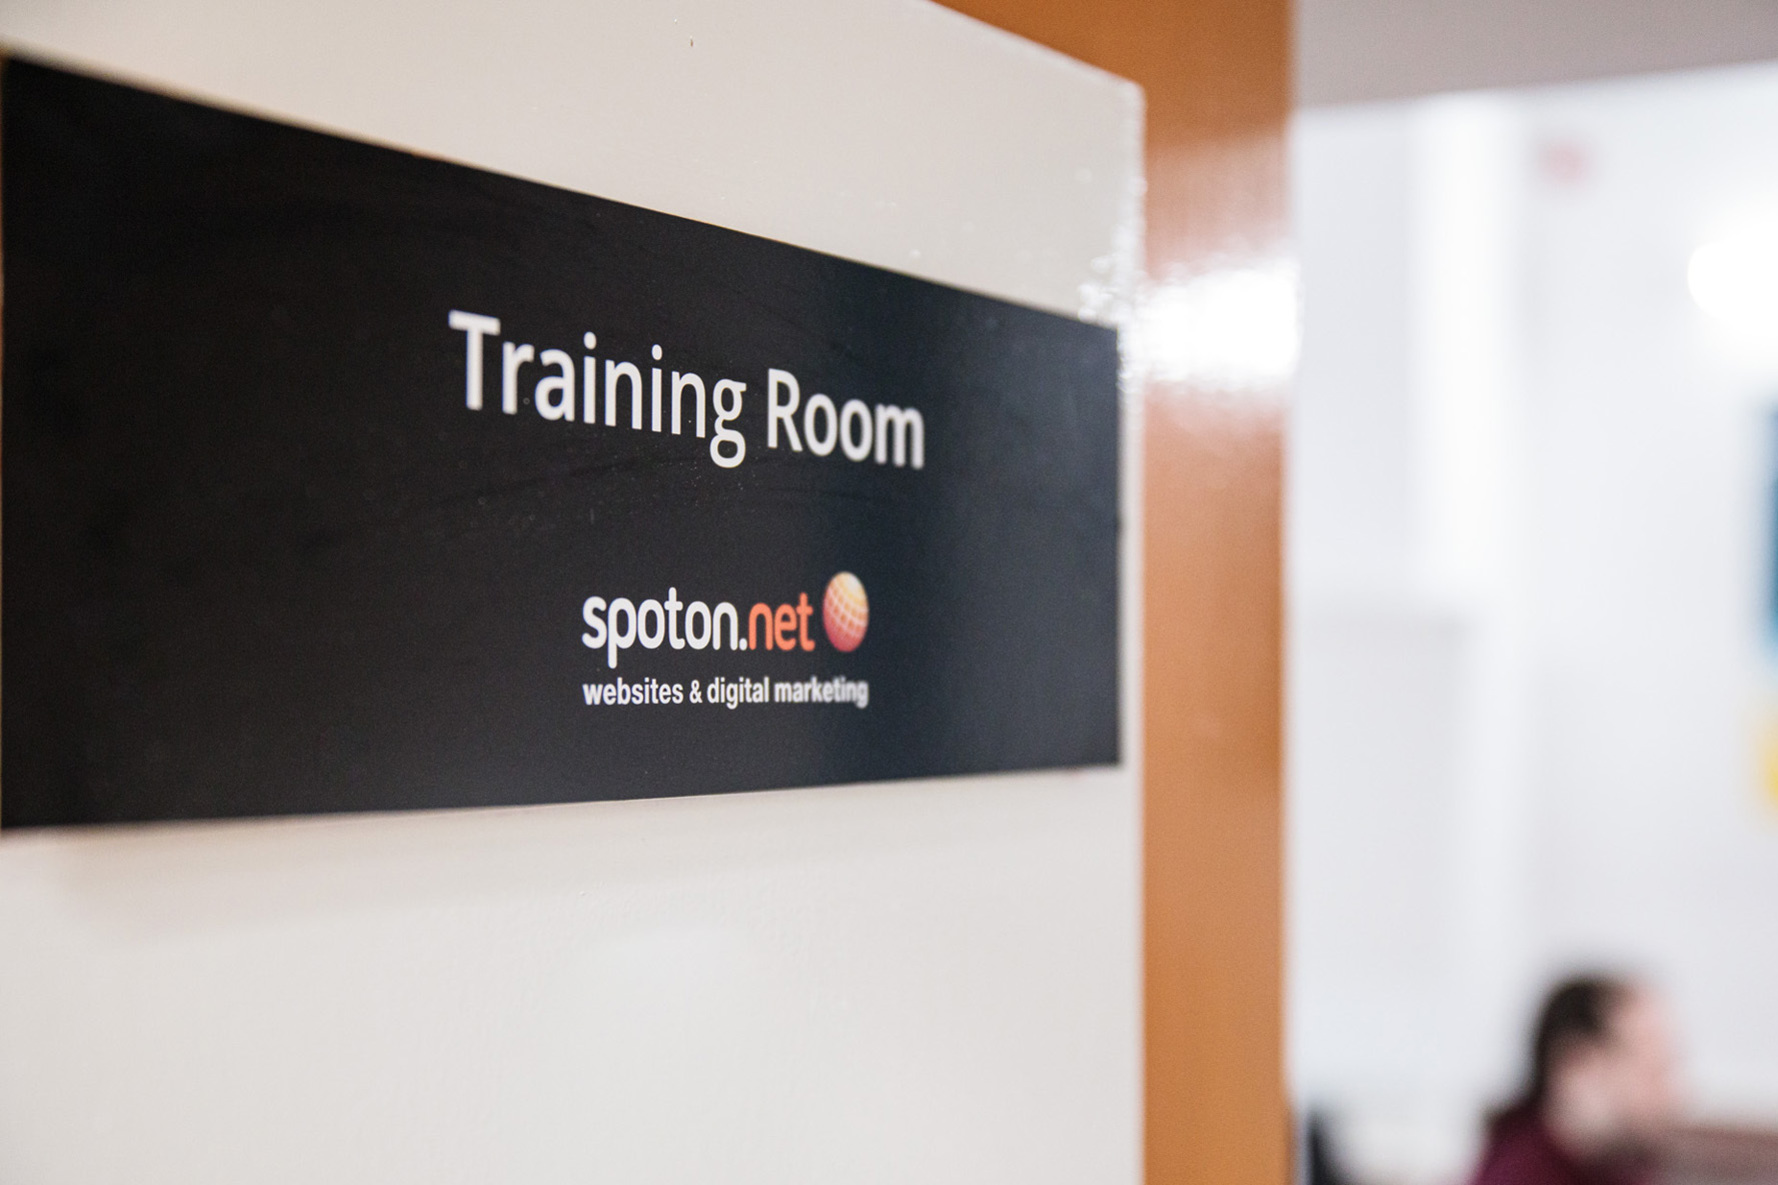 Spoton.net Training Room